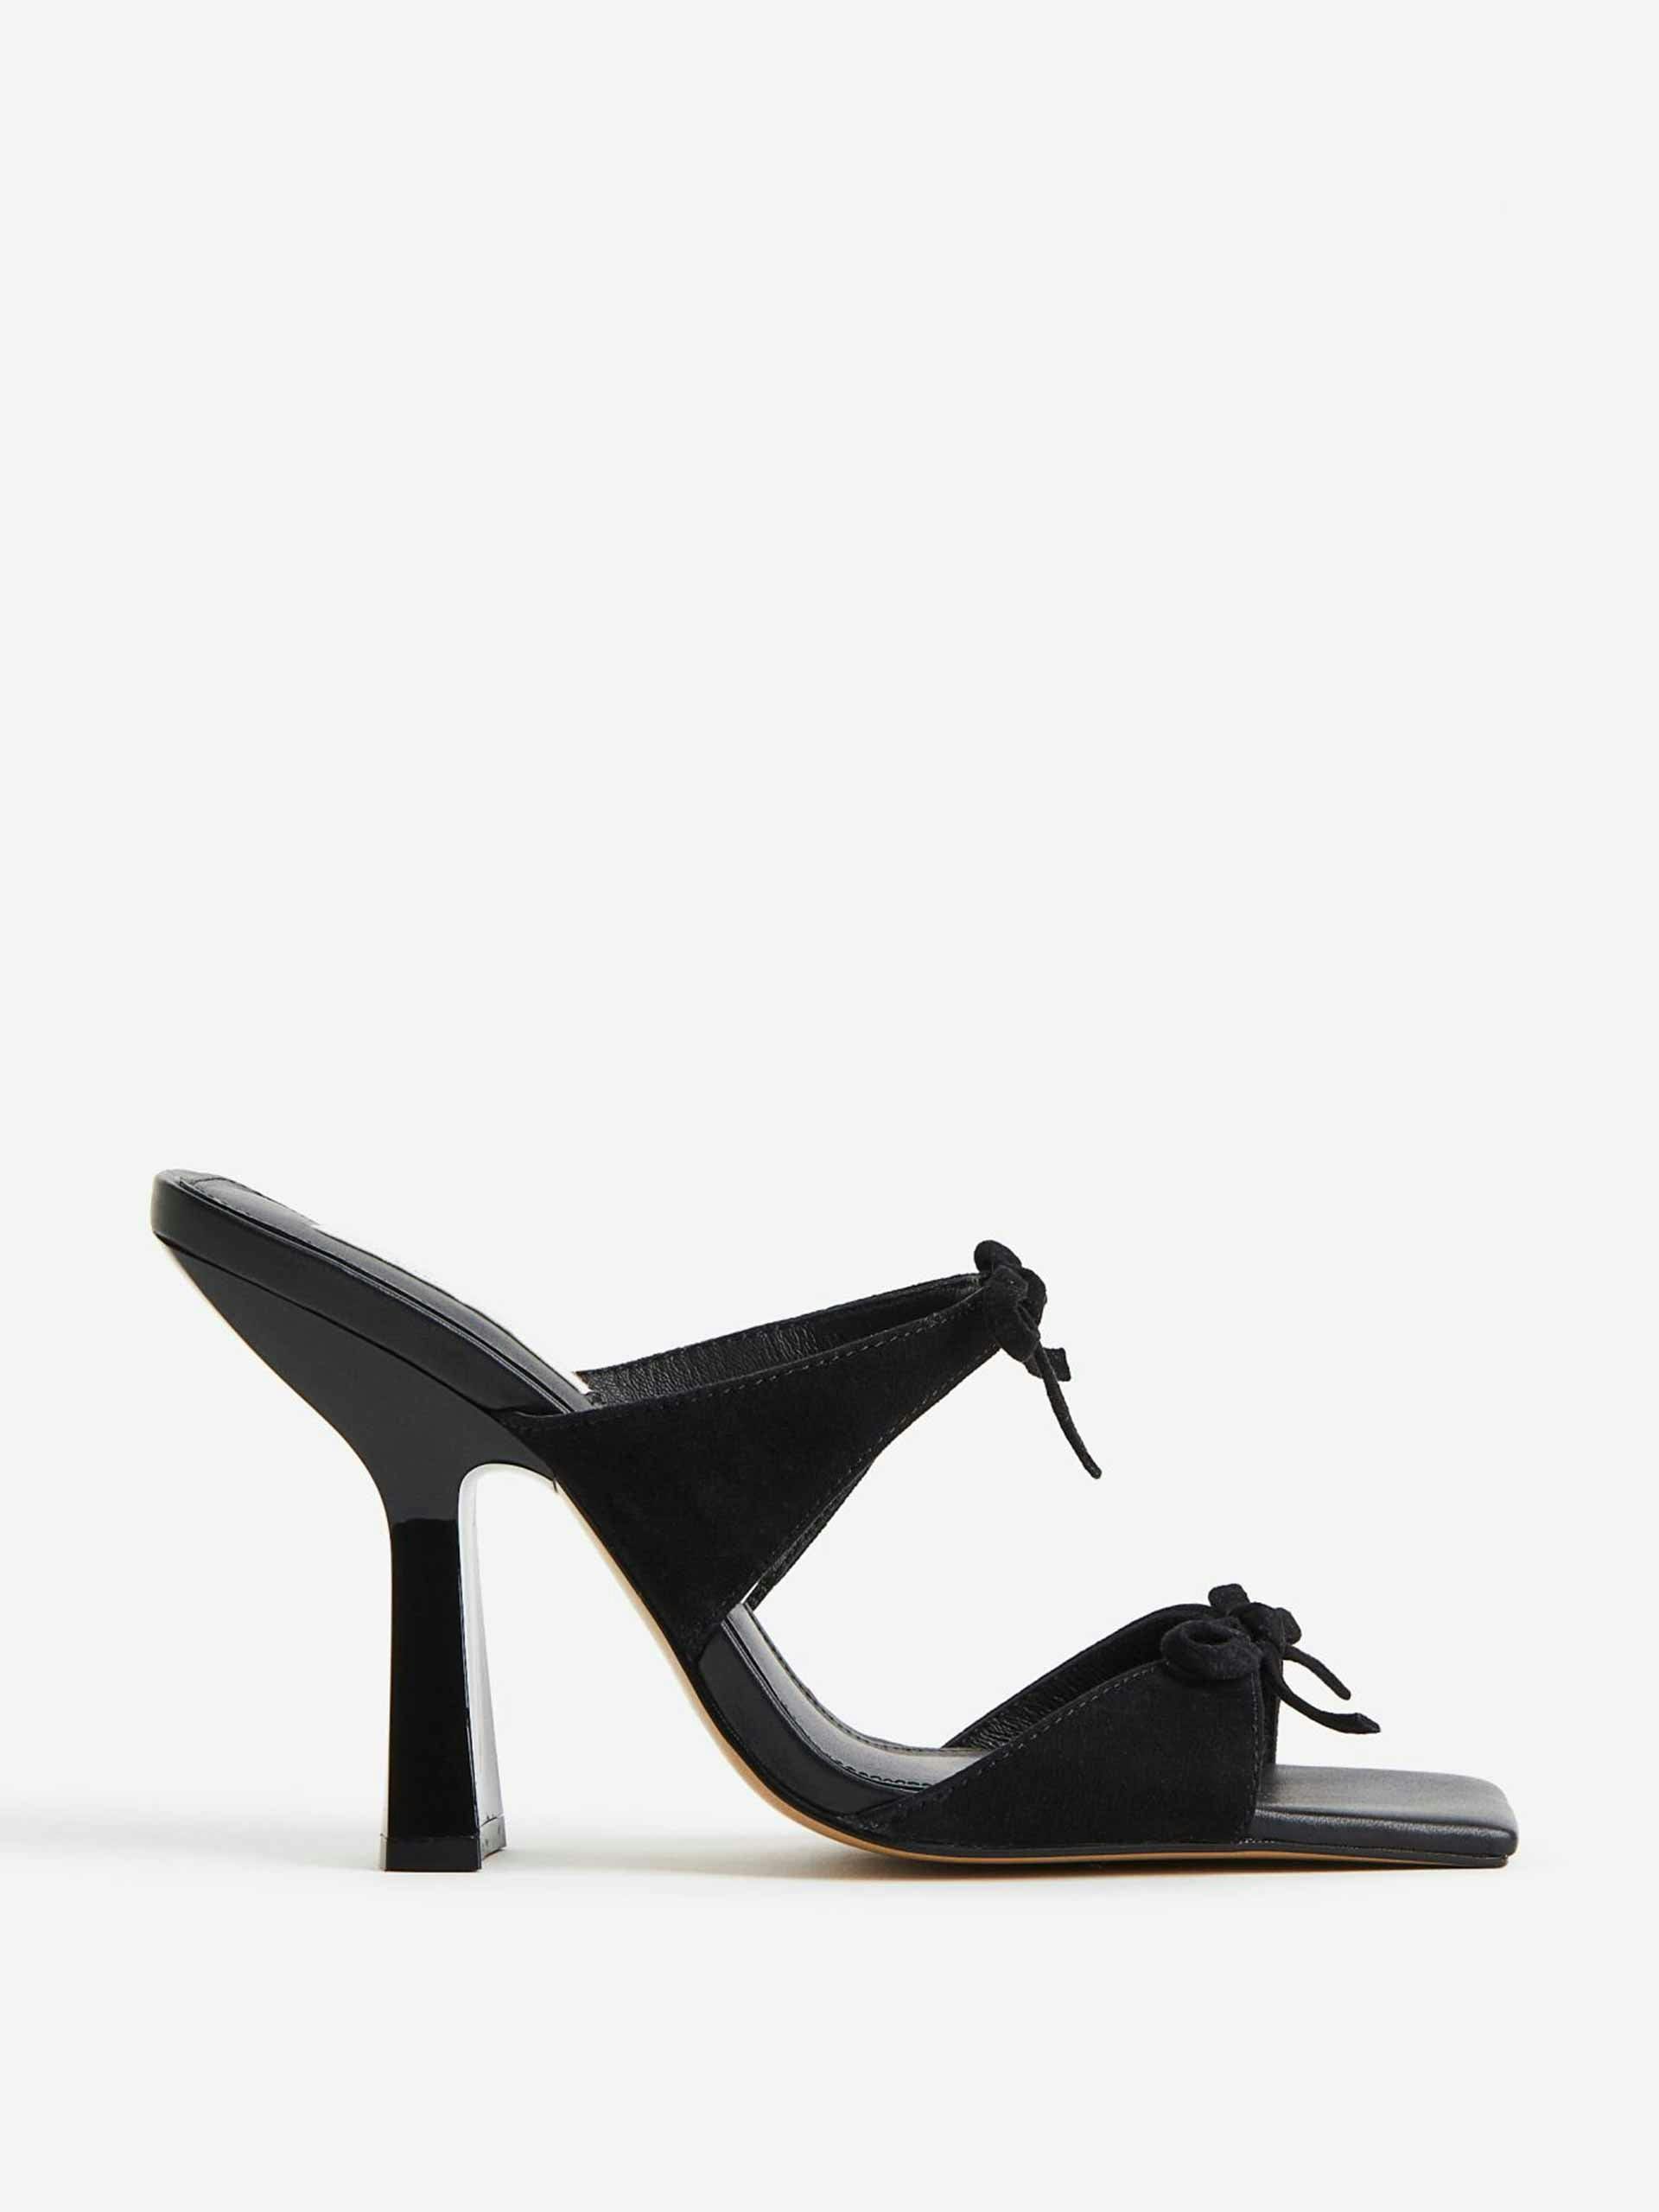 Black suede heeled sandals